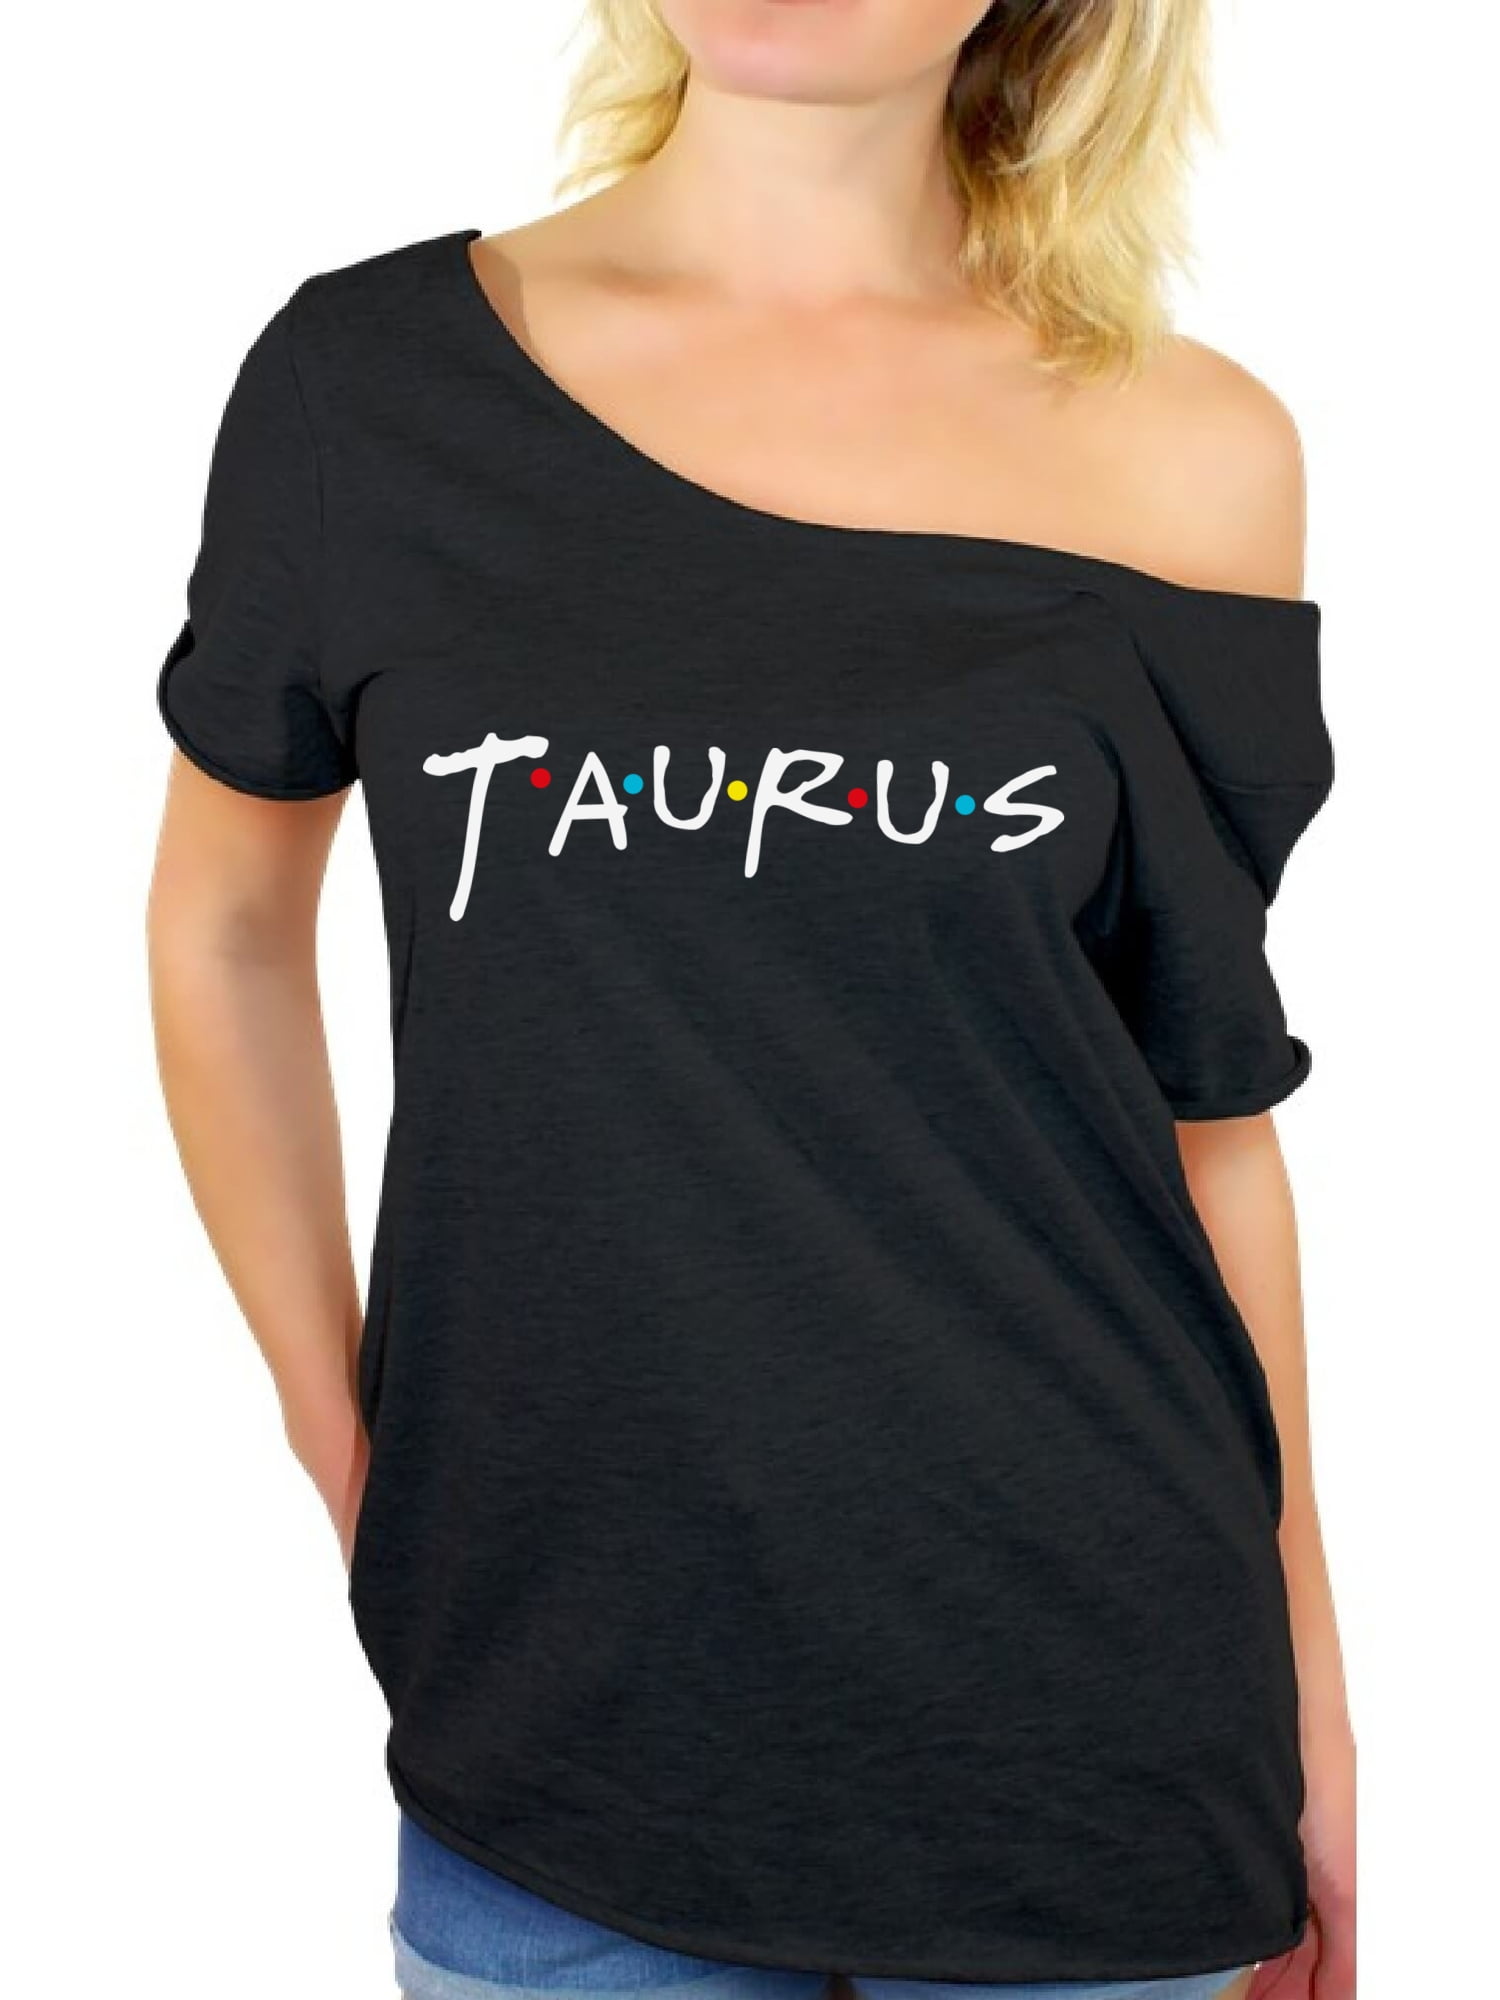 Taurus Embroidered Women's short sleeve t-shirt Horoscope Zodiac Sign Taurus Gift Astrology Shirt